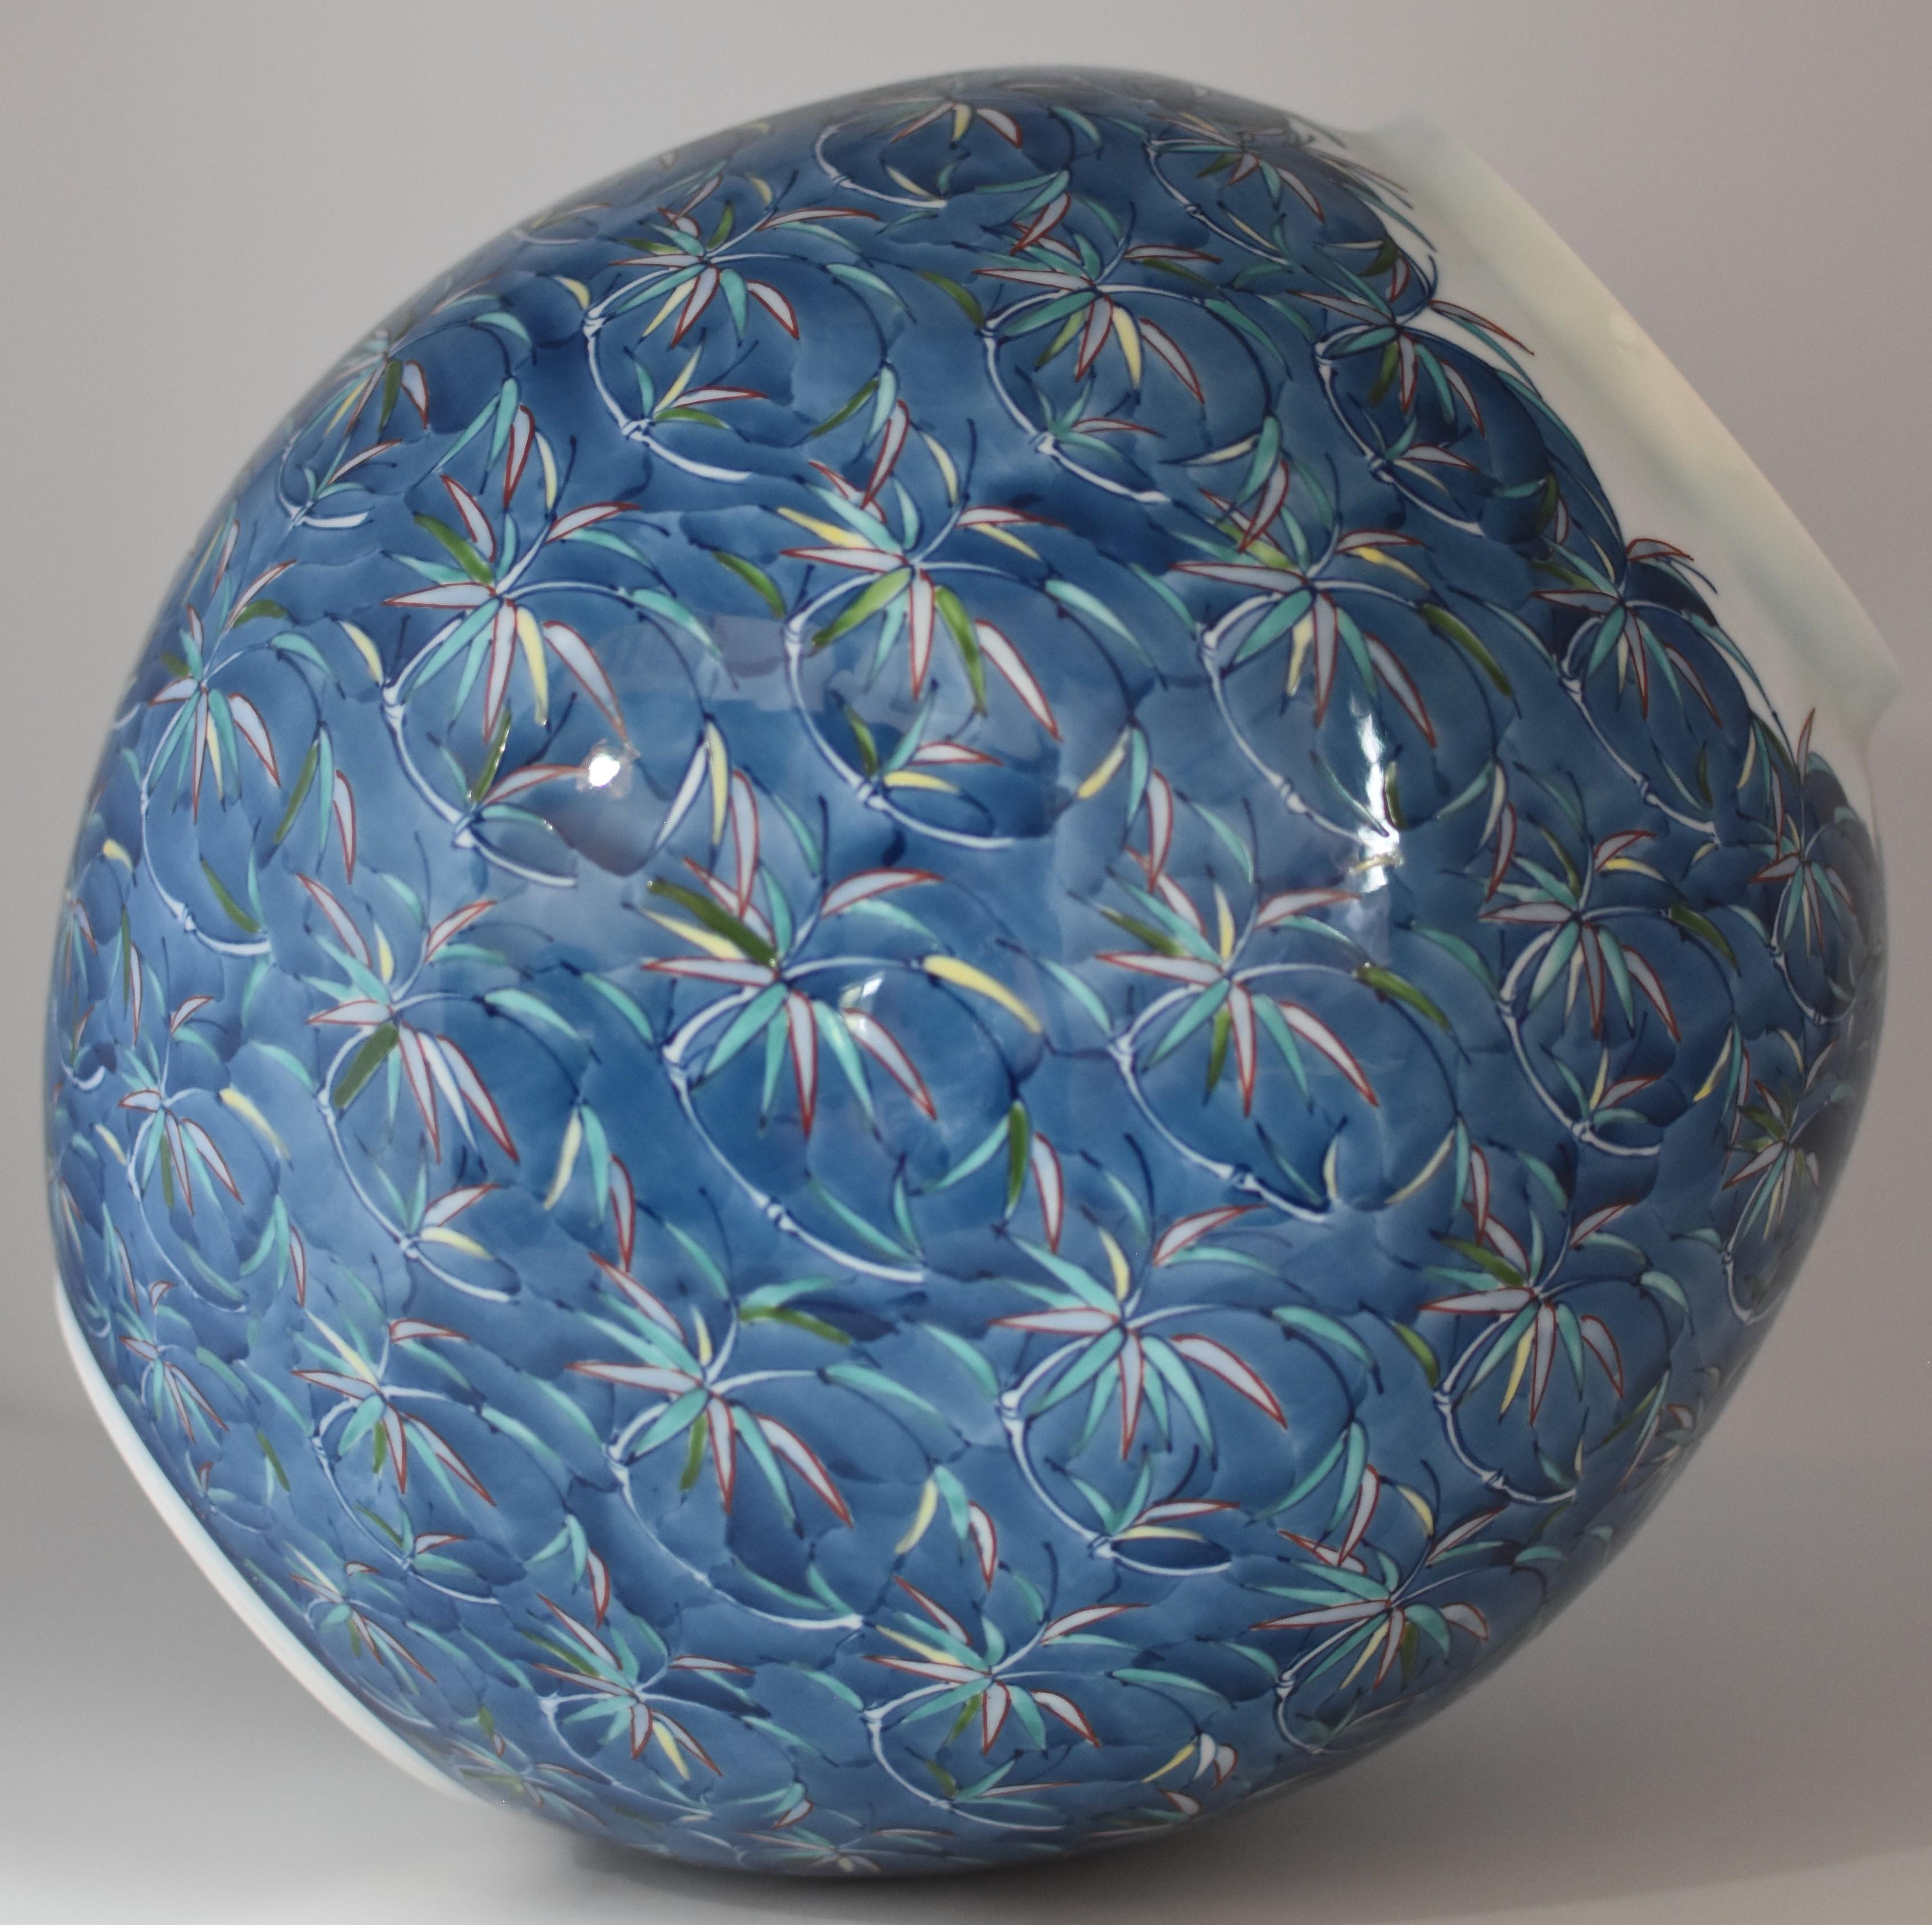 Japanese Contemporary Blue Green Imari Ceramic Vase by Master Artist 1